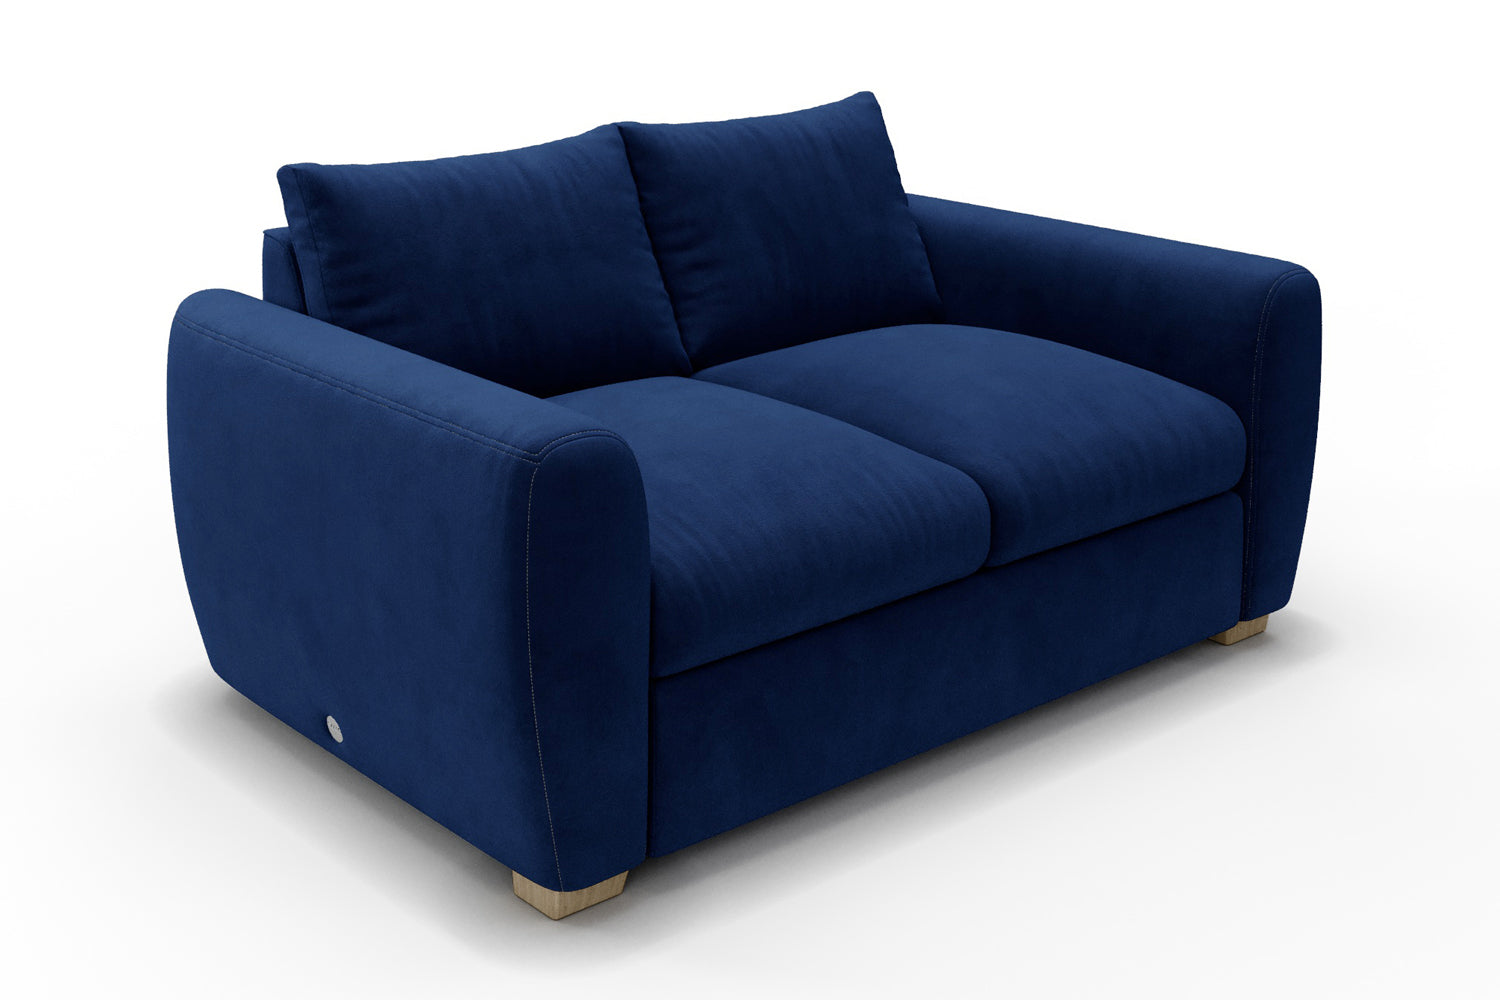 SNUG | The Cloud Sundae 2 Seater Sofa in Midnight Blue